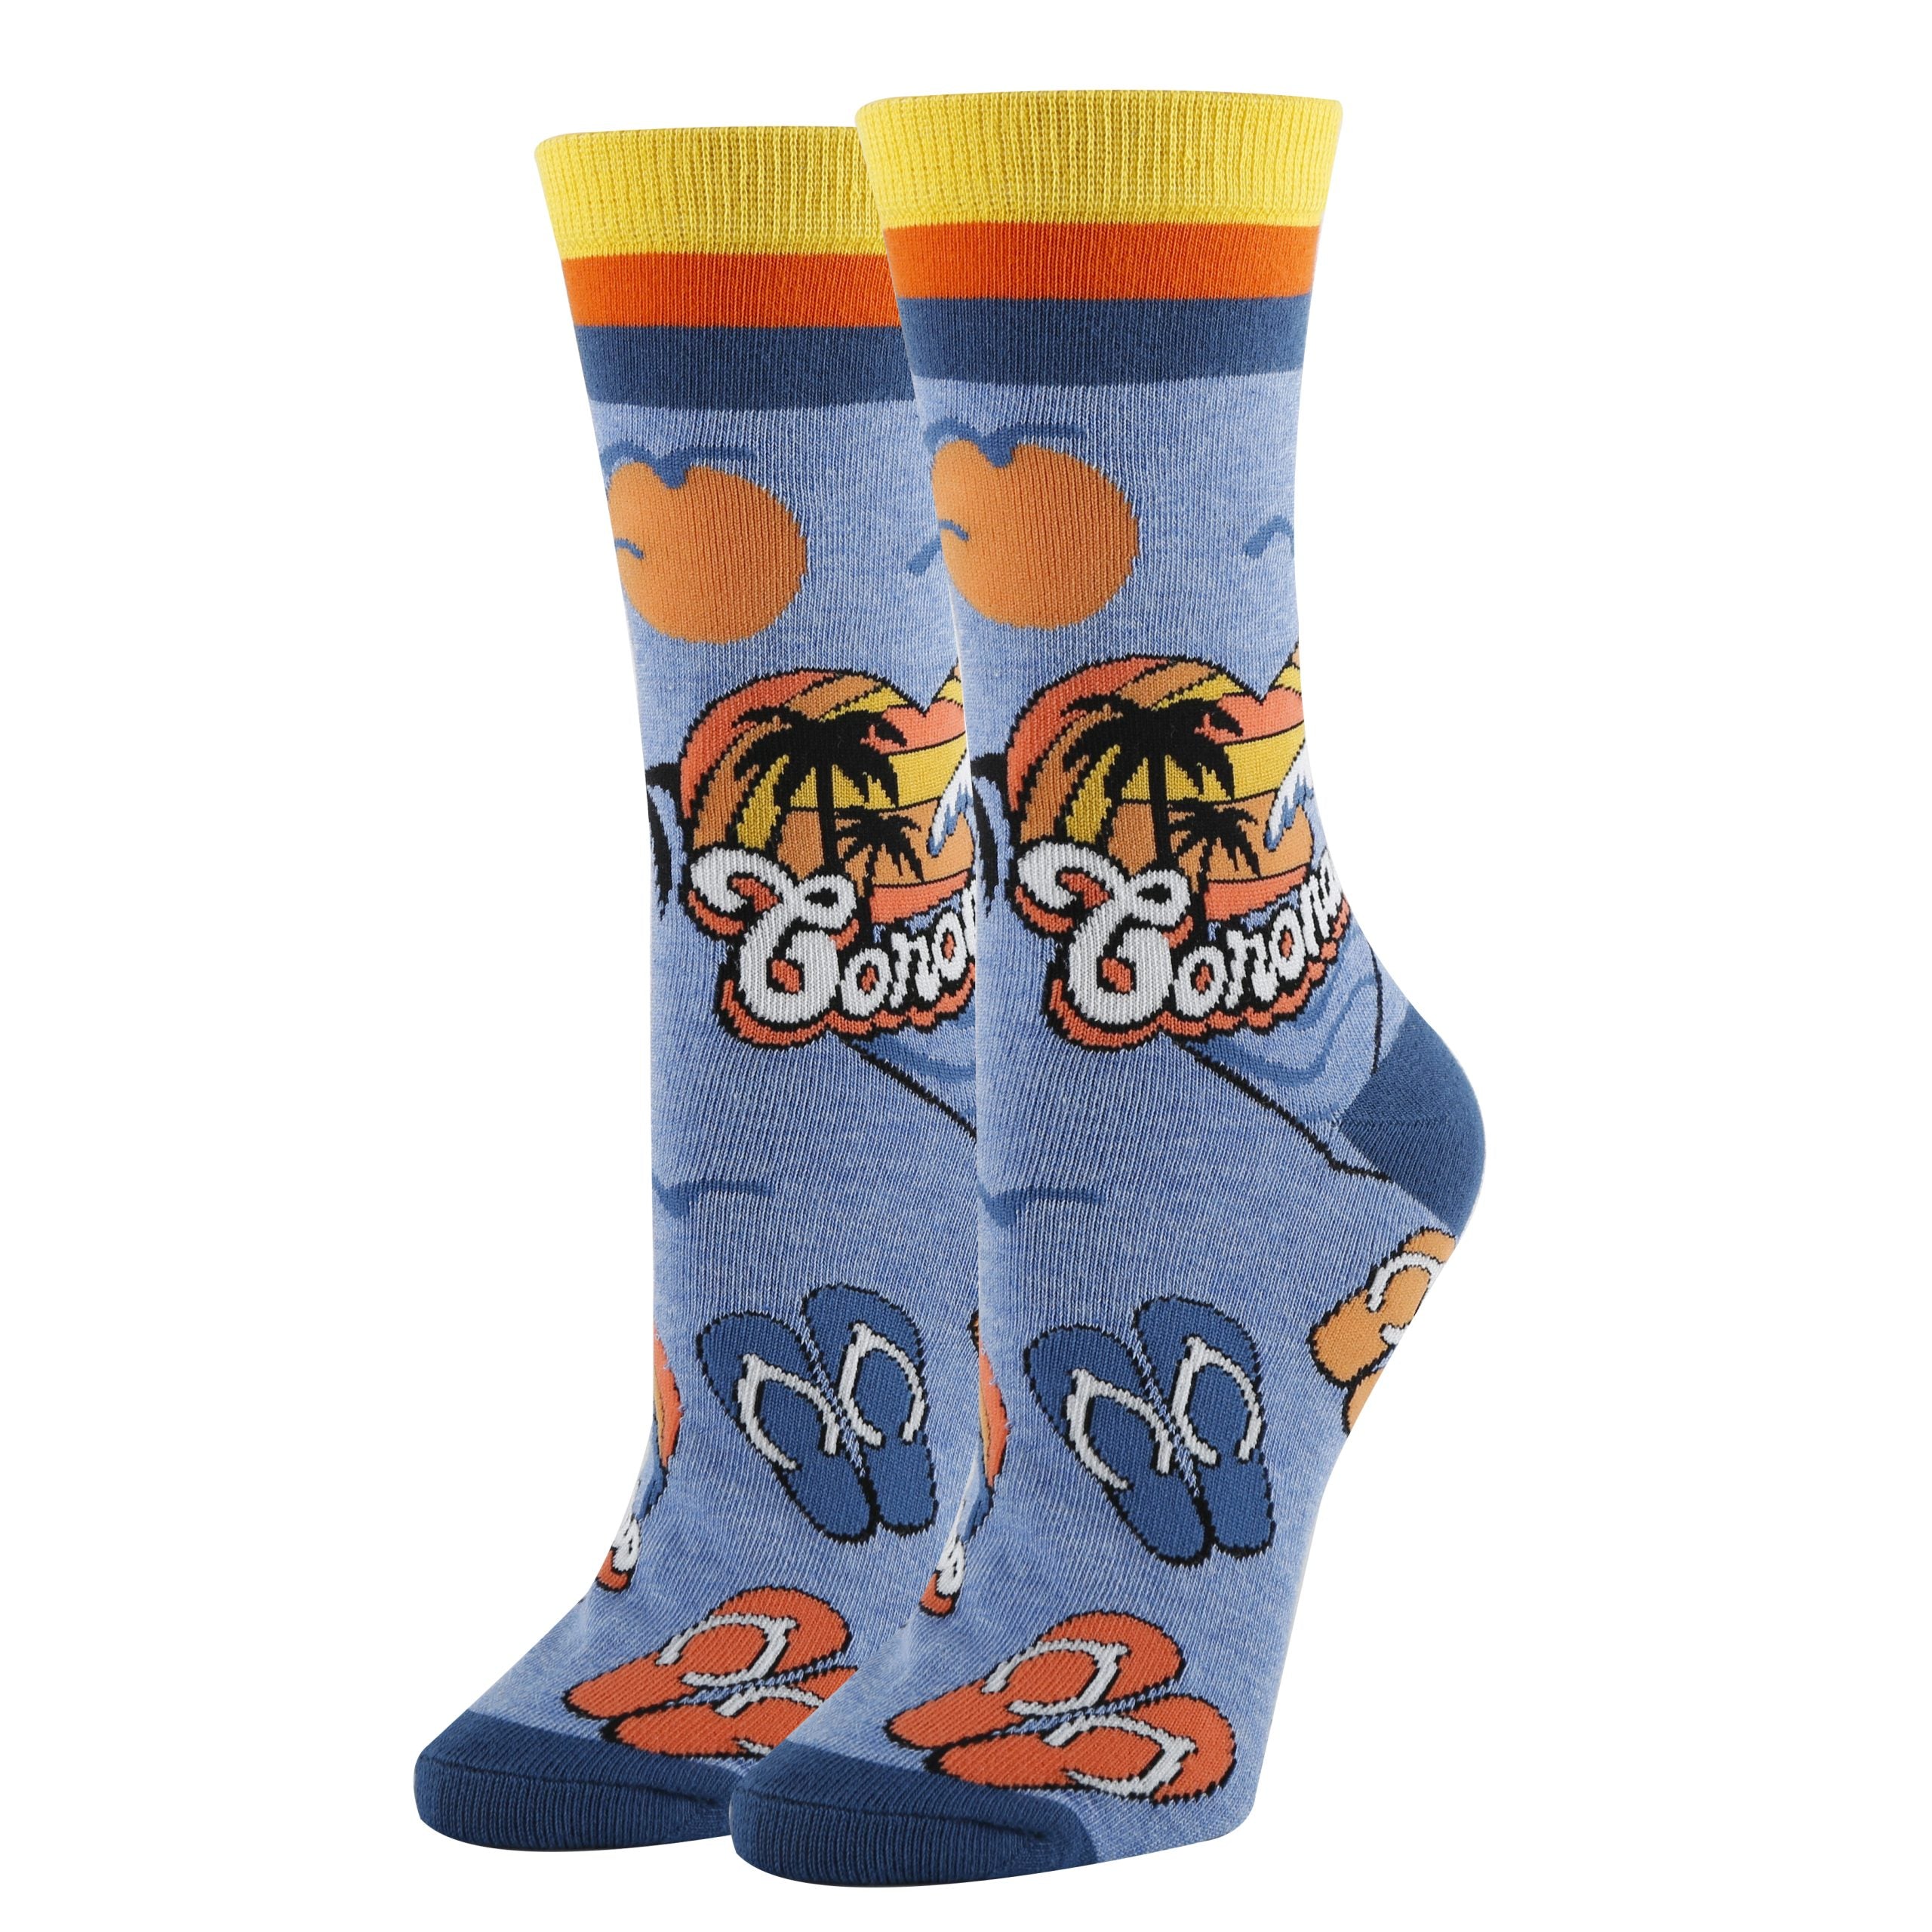 Coronado Socks | Funny Crew Socks for Women